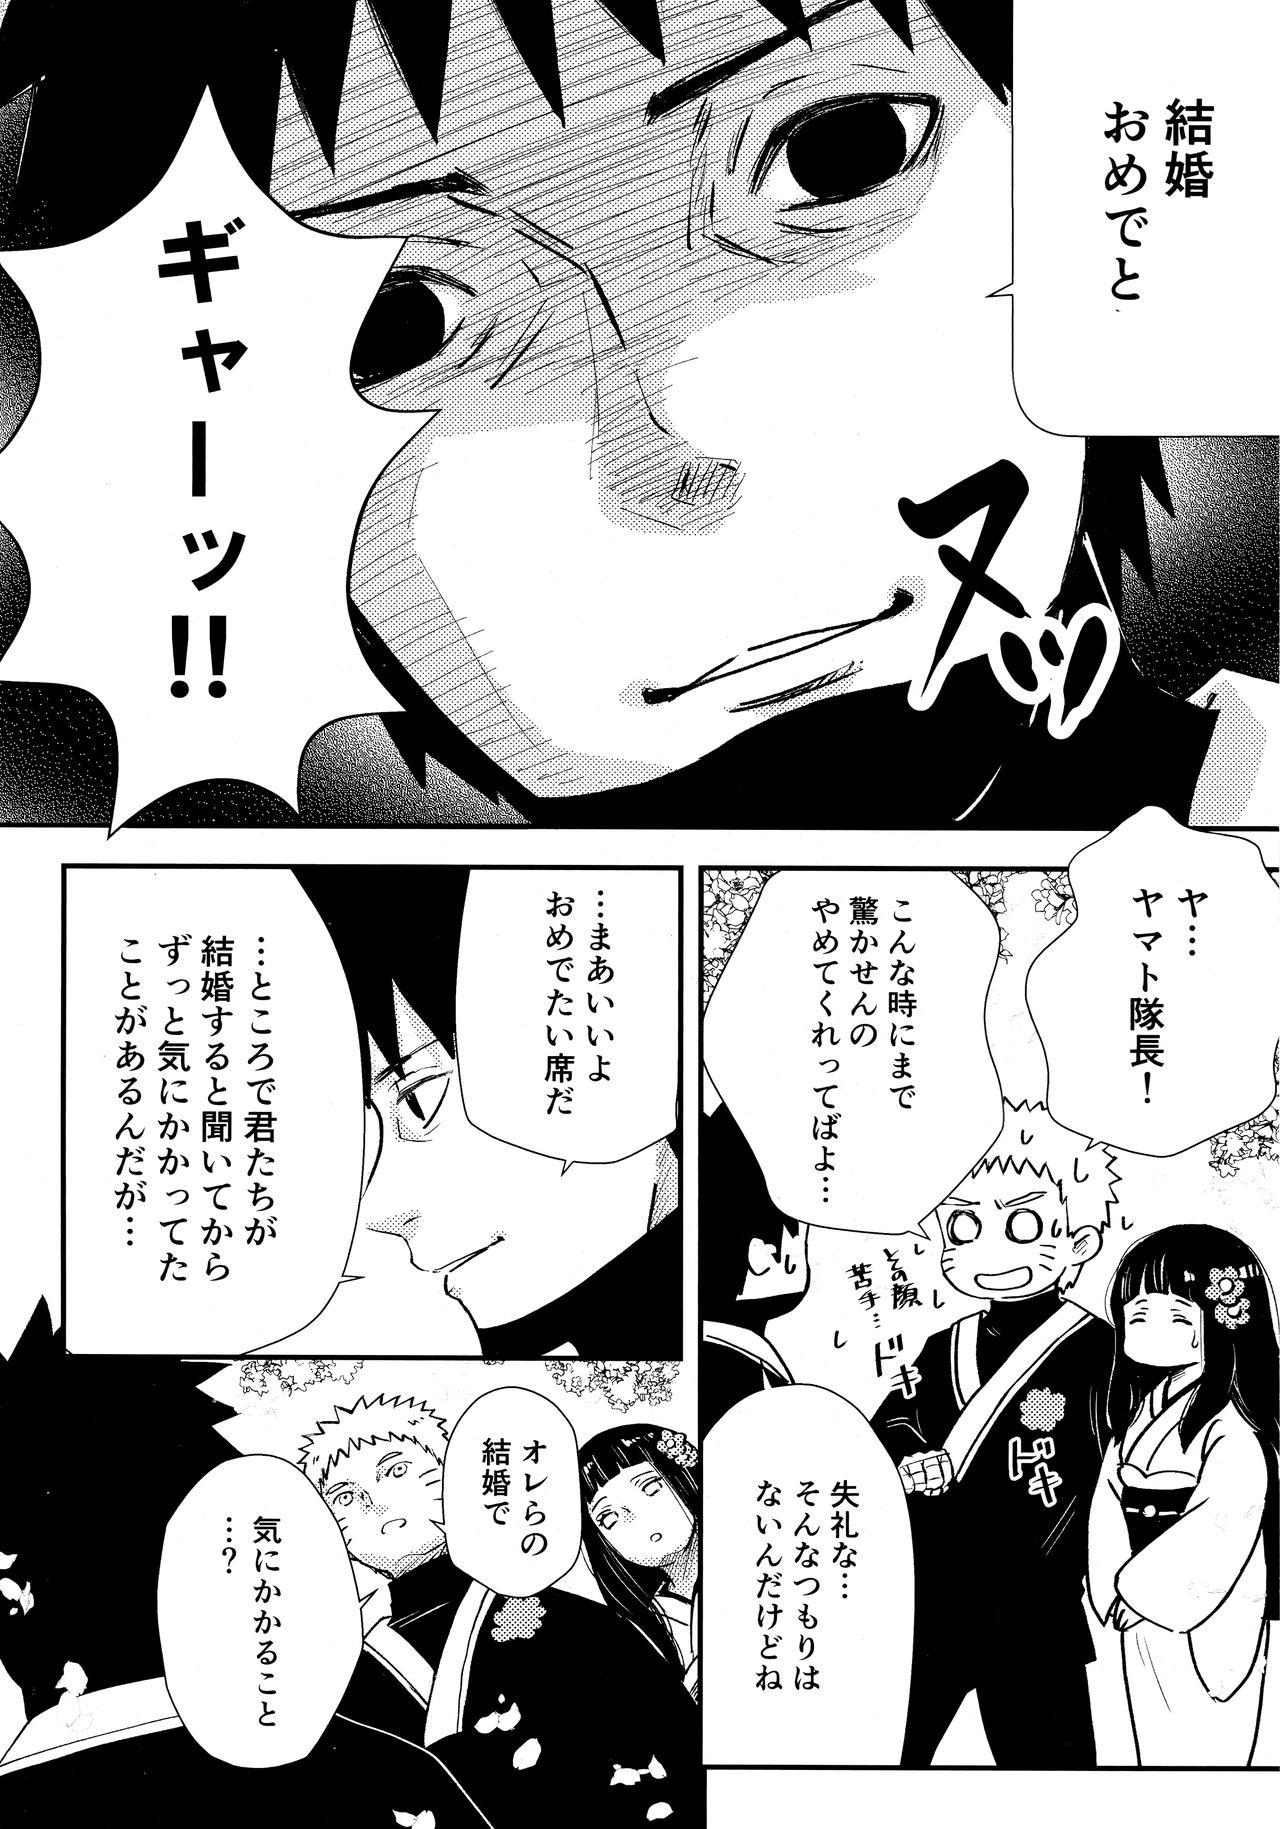 Sesso Chronology 2 - Naruto Boruto Enema - Page 8